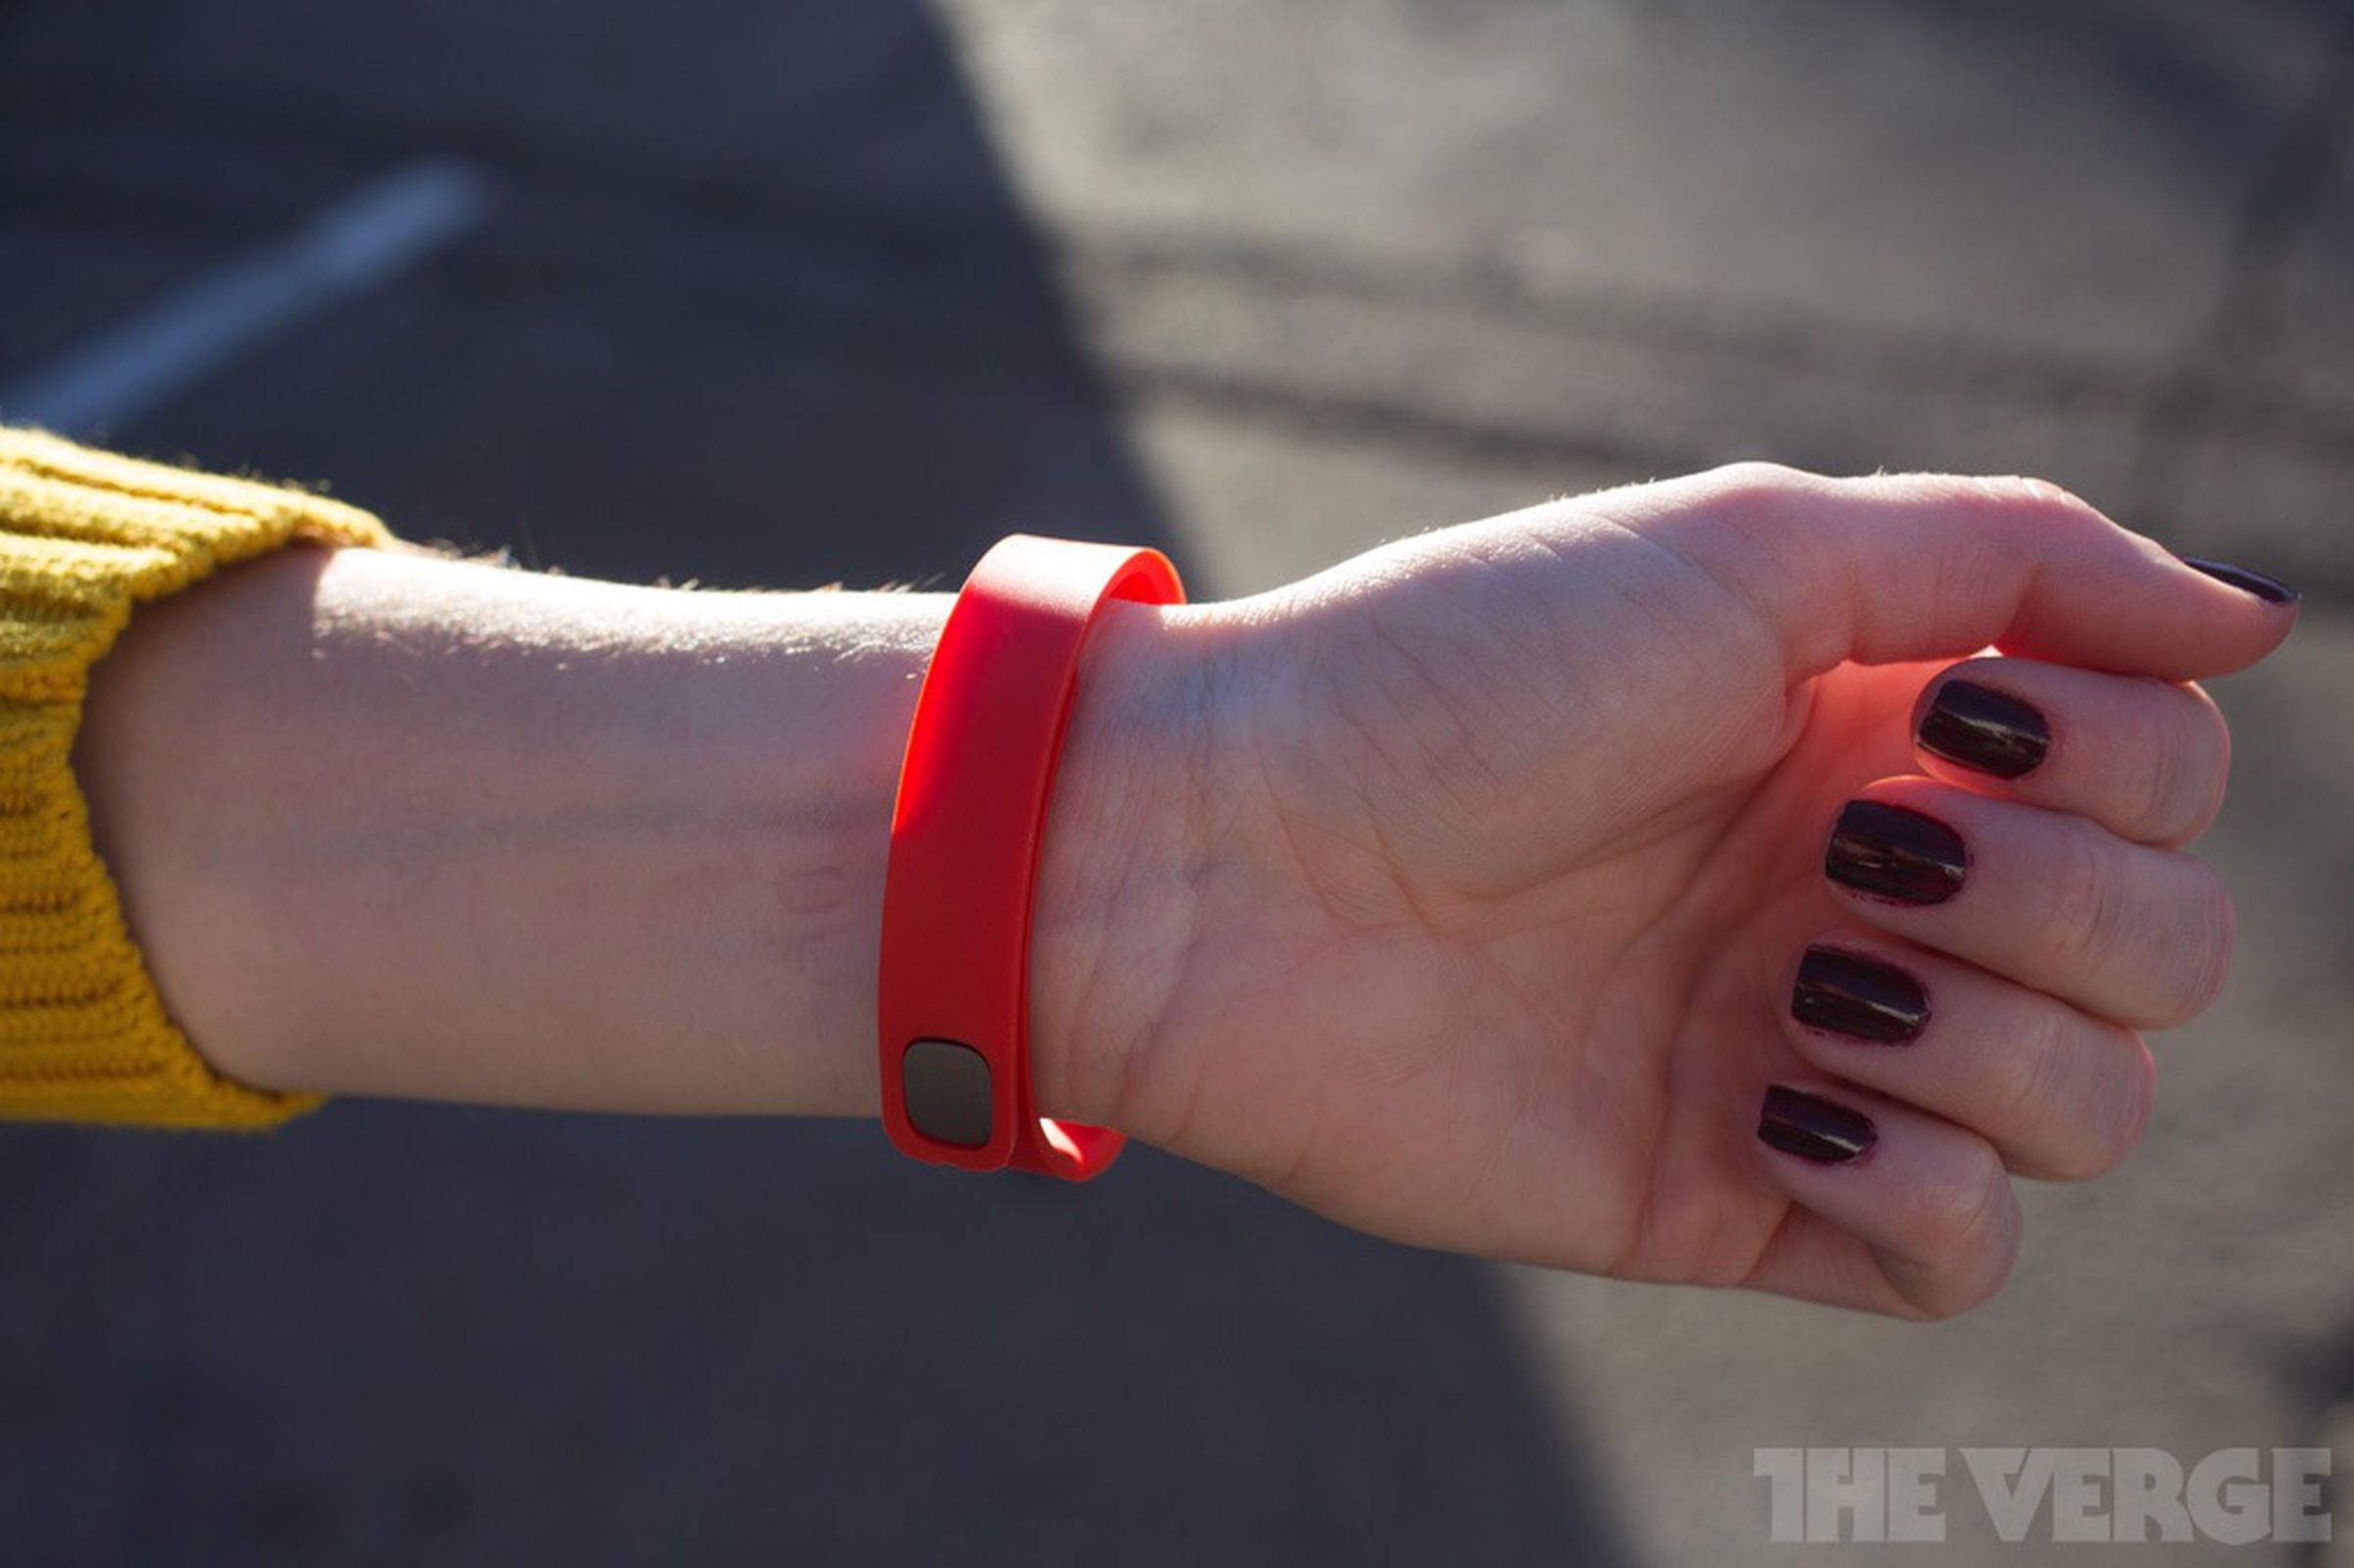 Fitbit Flex wristband fitness tracker hands-on photos